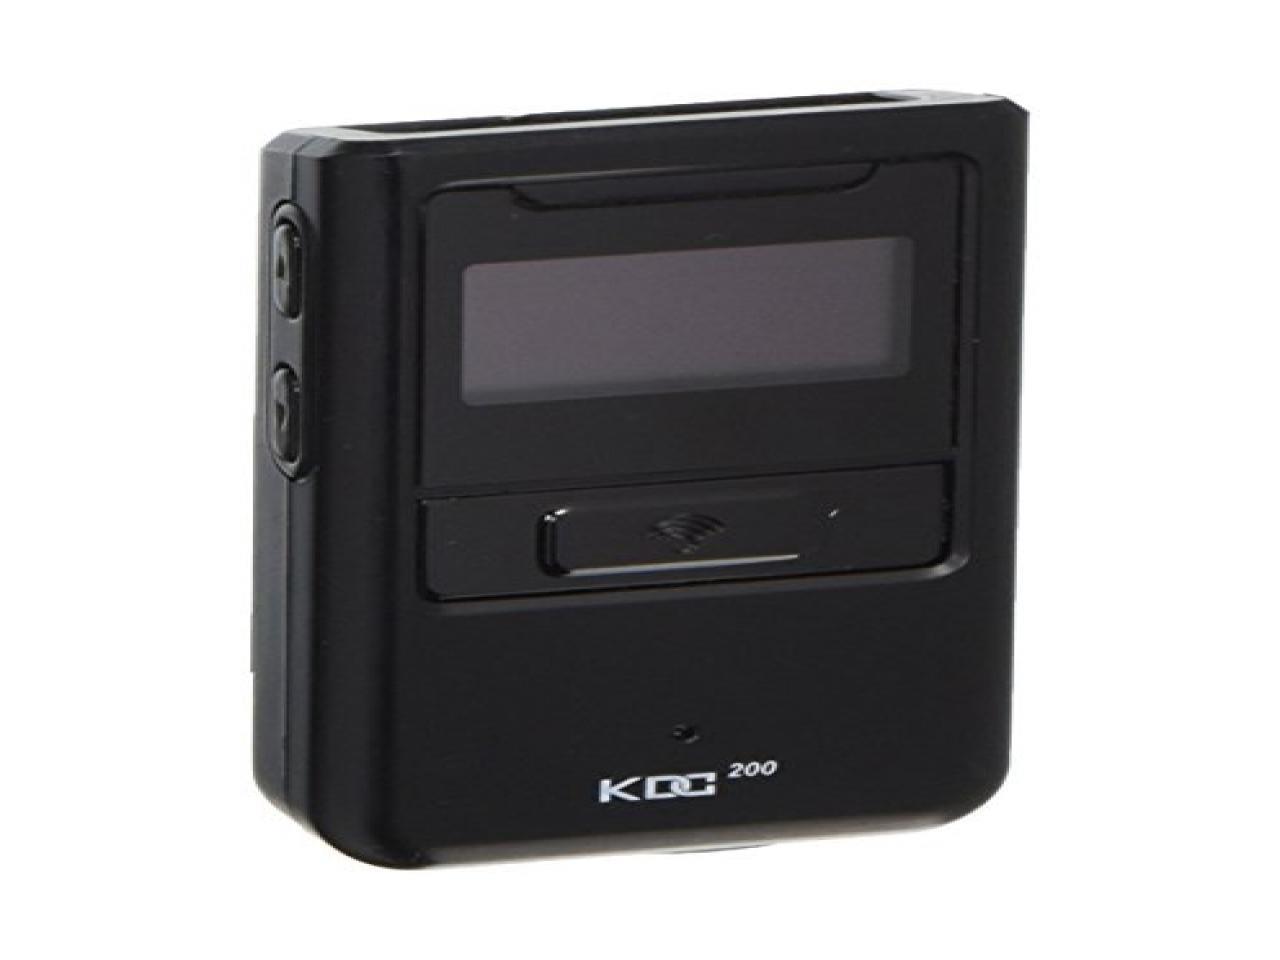 Koamtac KDC200i Bluetooth Barcode Scanner Amazon FBA iOS iPhone Android Windows